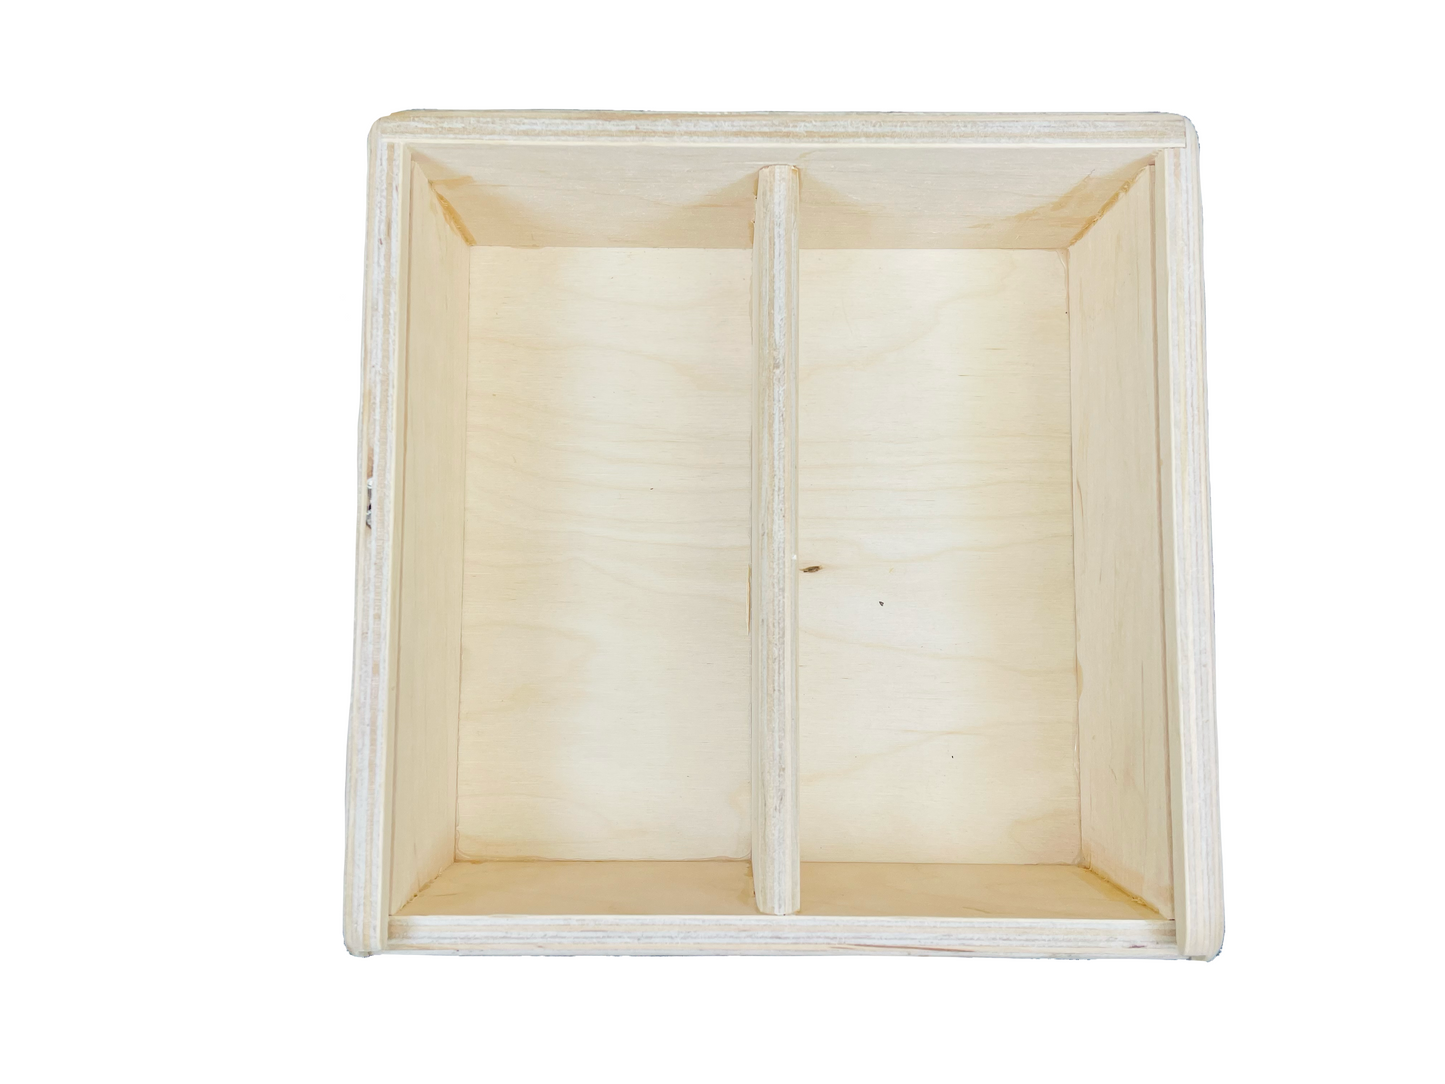 Wooden box for activities